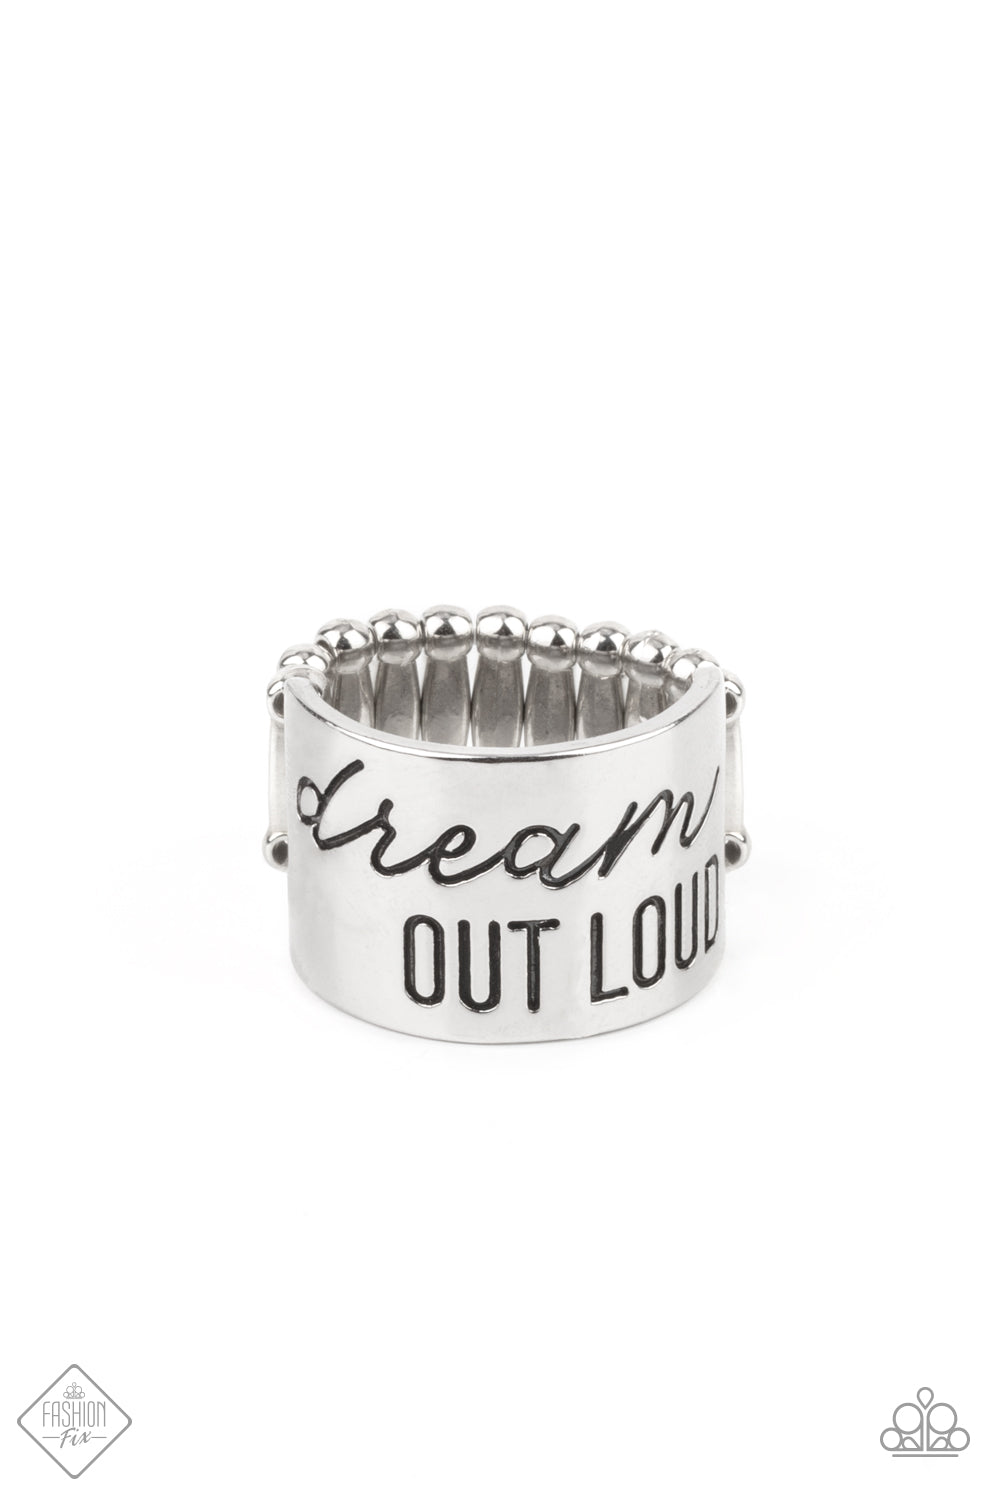 Dream Louder - Silver ring (Fashion Fix - July 2021)